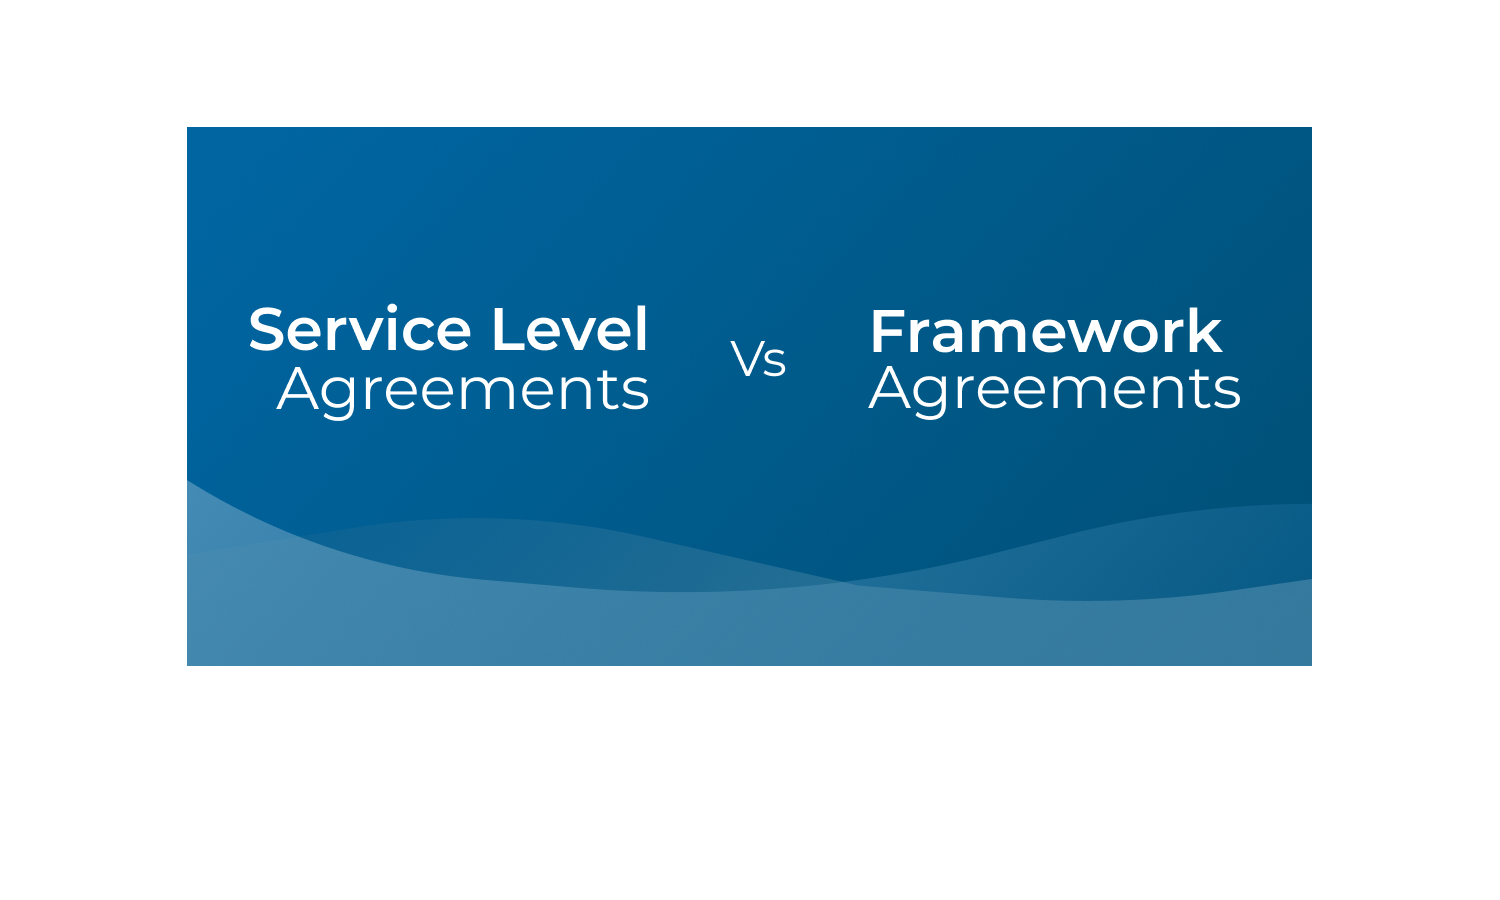 Service level agreements vs framework agreements